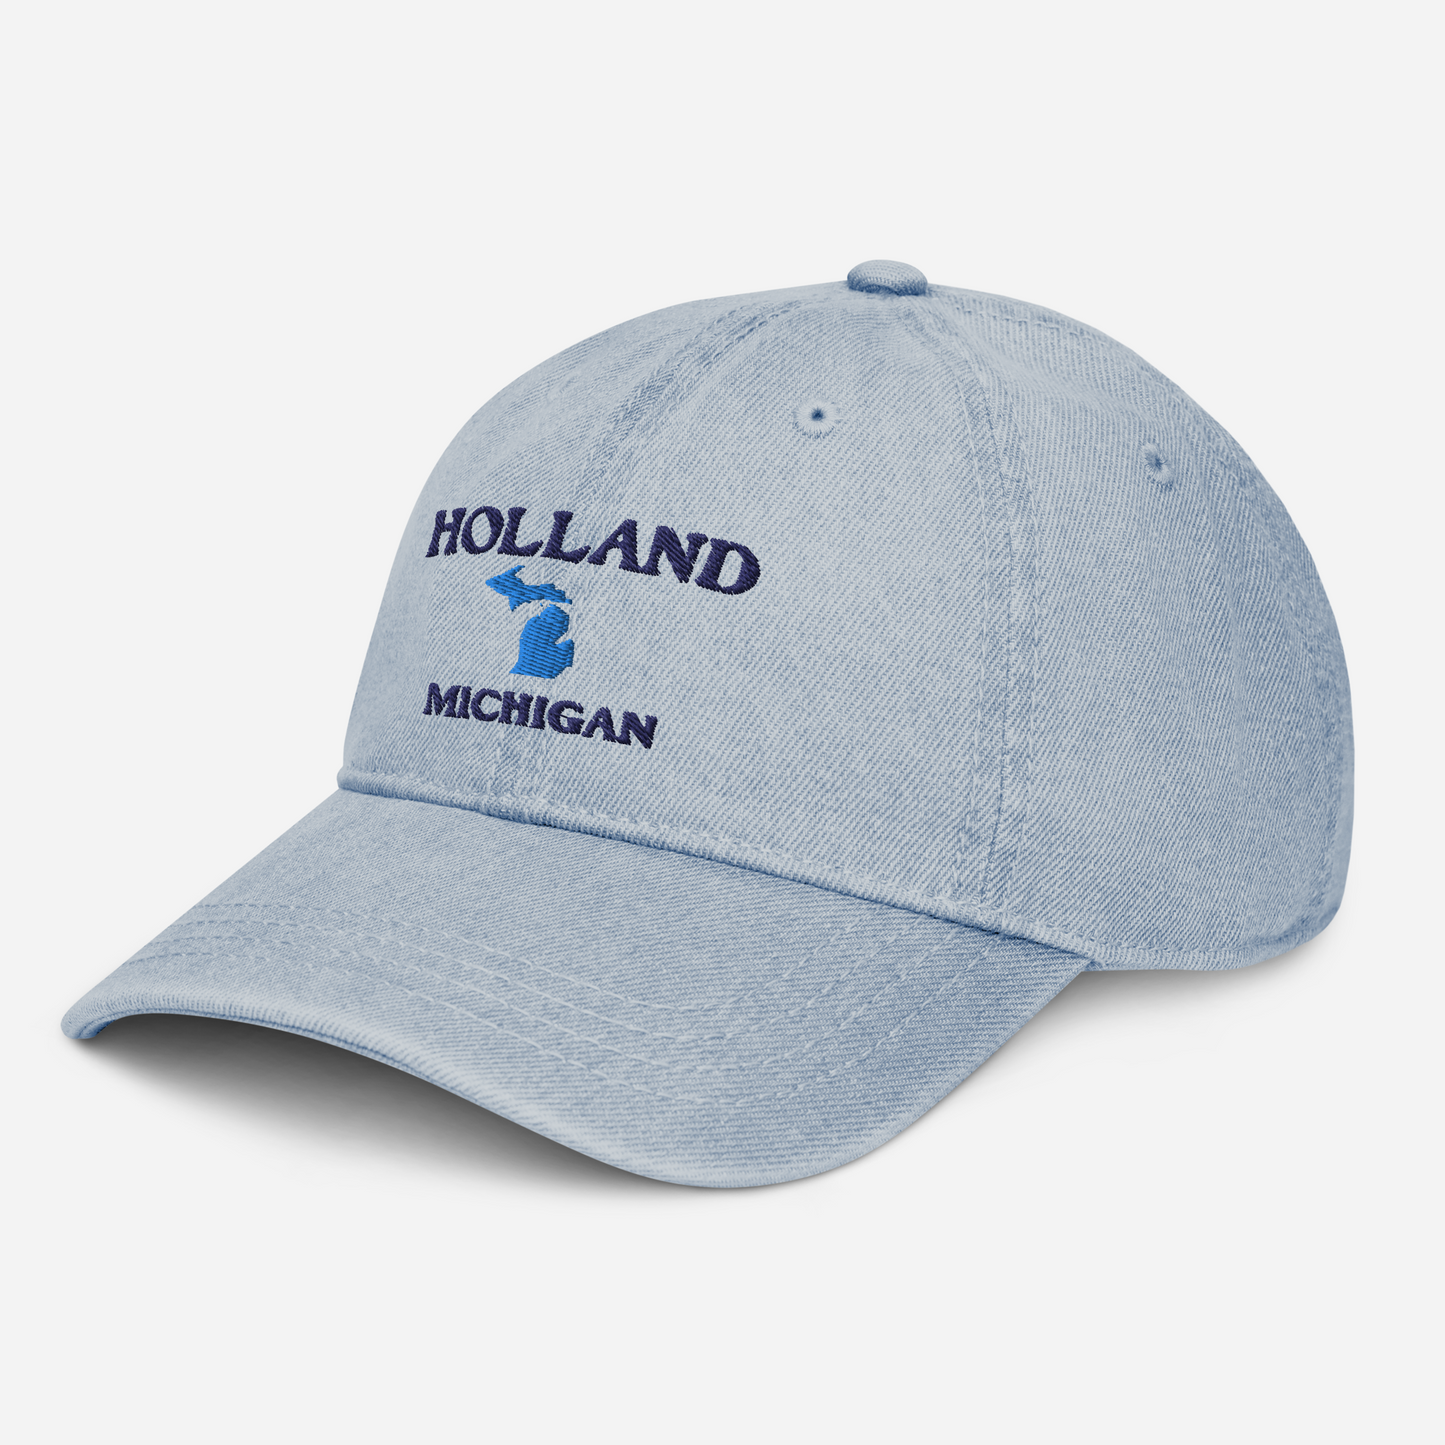 'Holland Michigan' Denim Baseball Cap (w/ Michigan Outline)